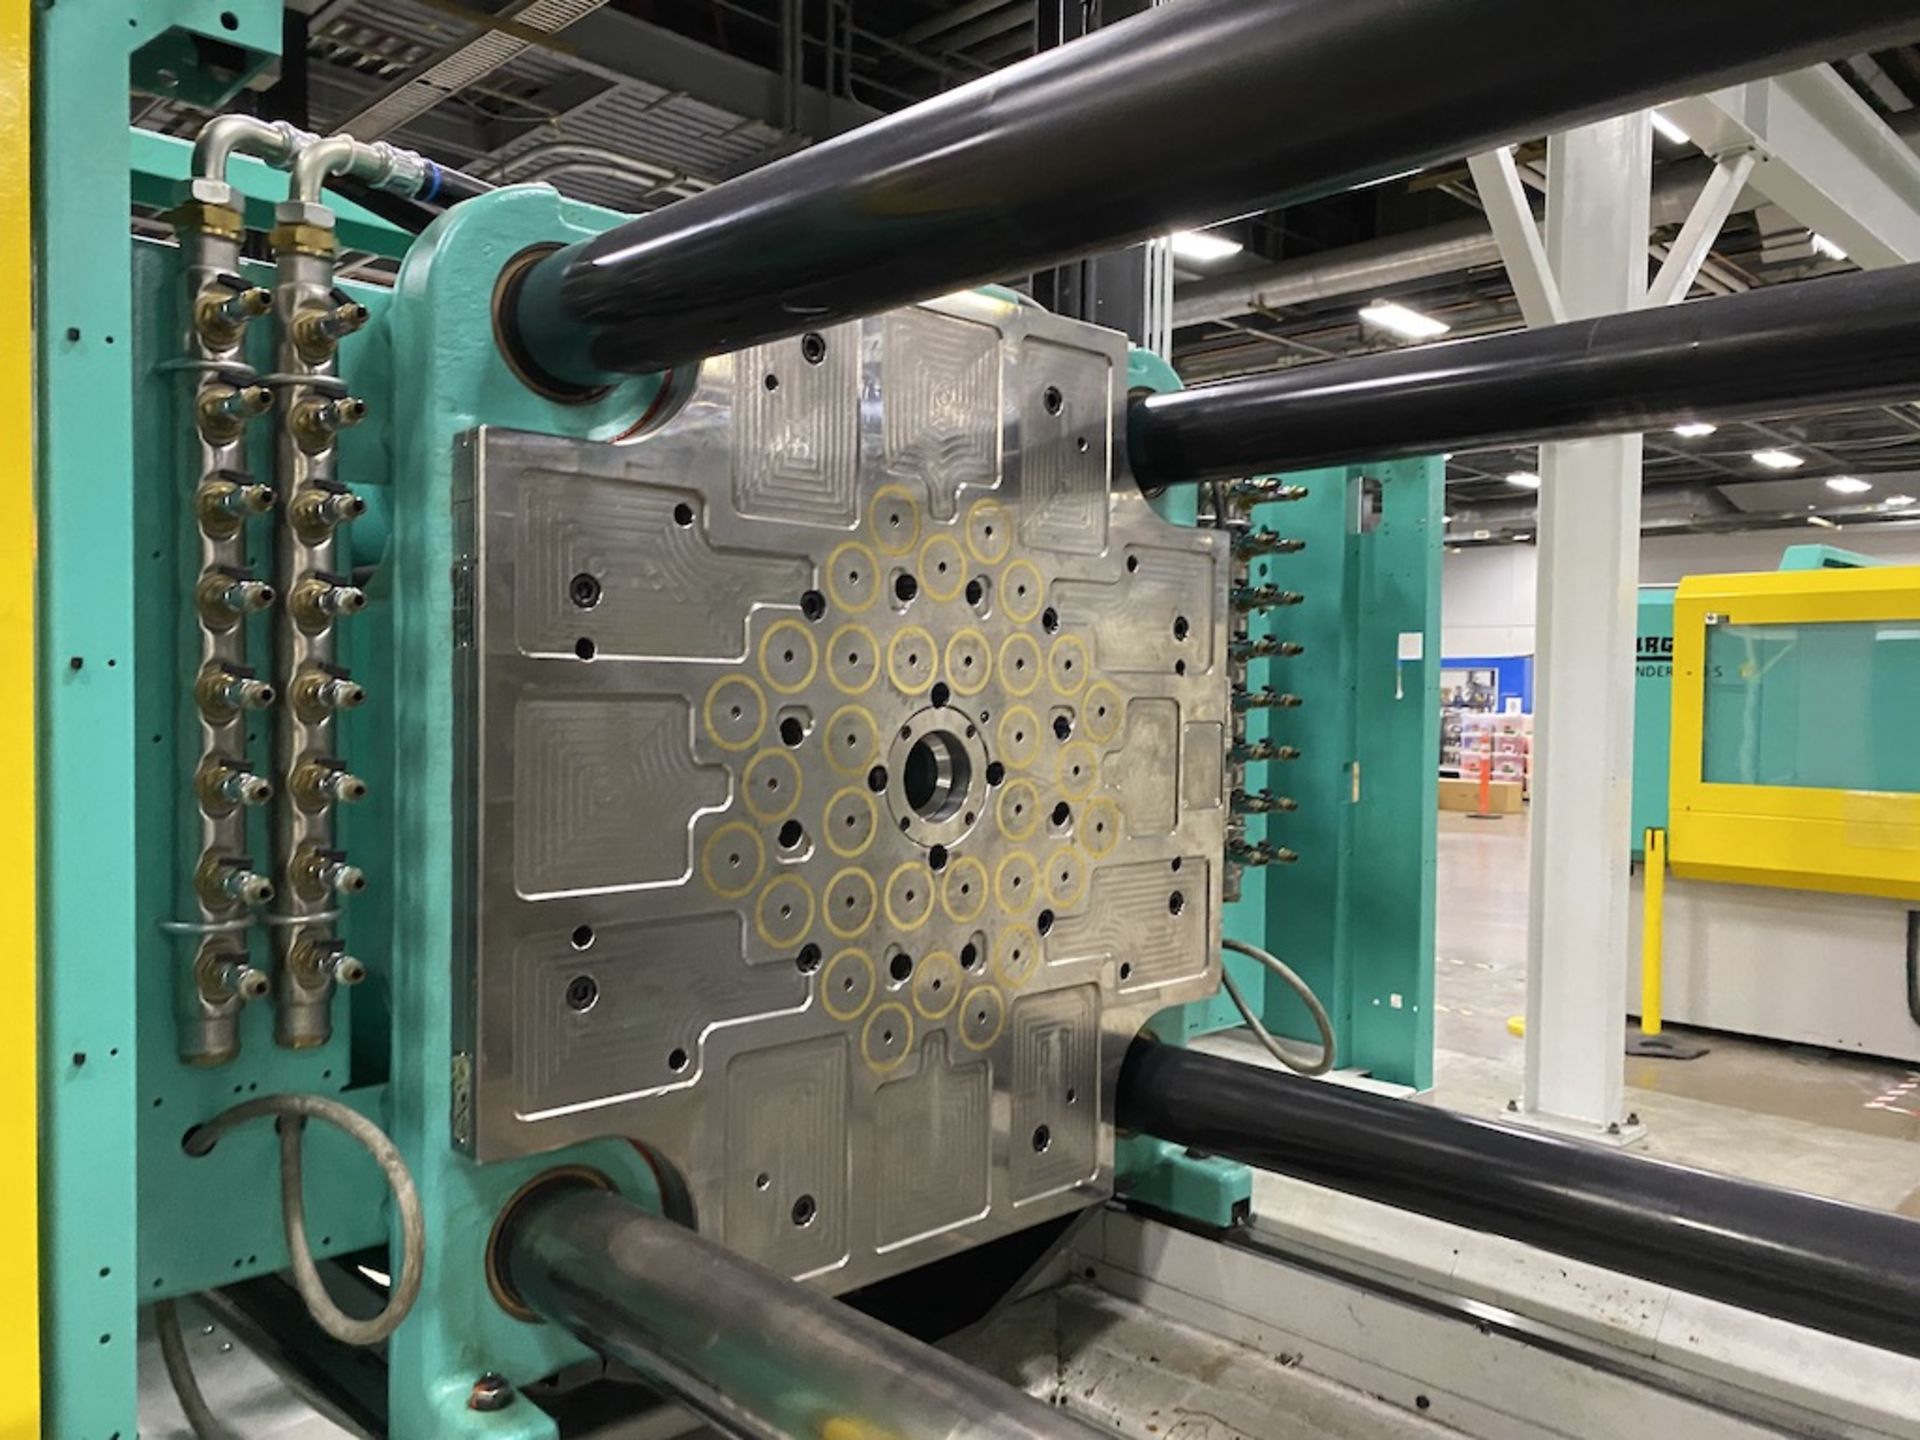 Arburg 320 Metric Ton Injection Molding Press w/Arburg Robot, New in 2015 - Bild 5 aus 10